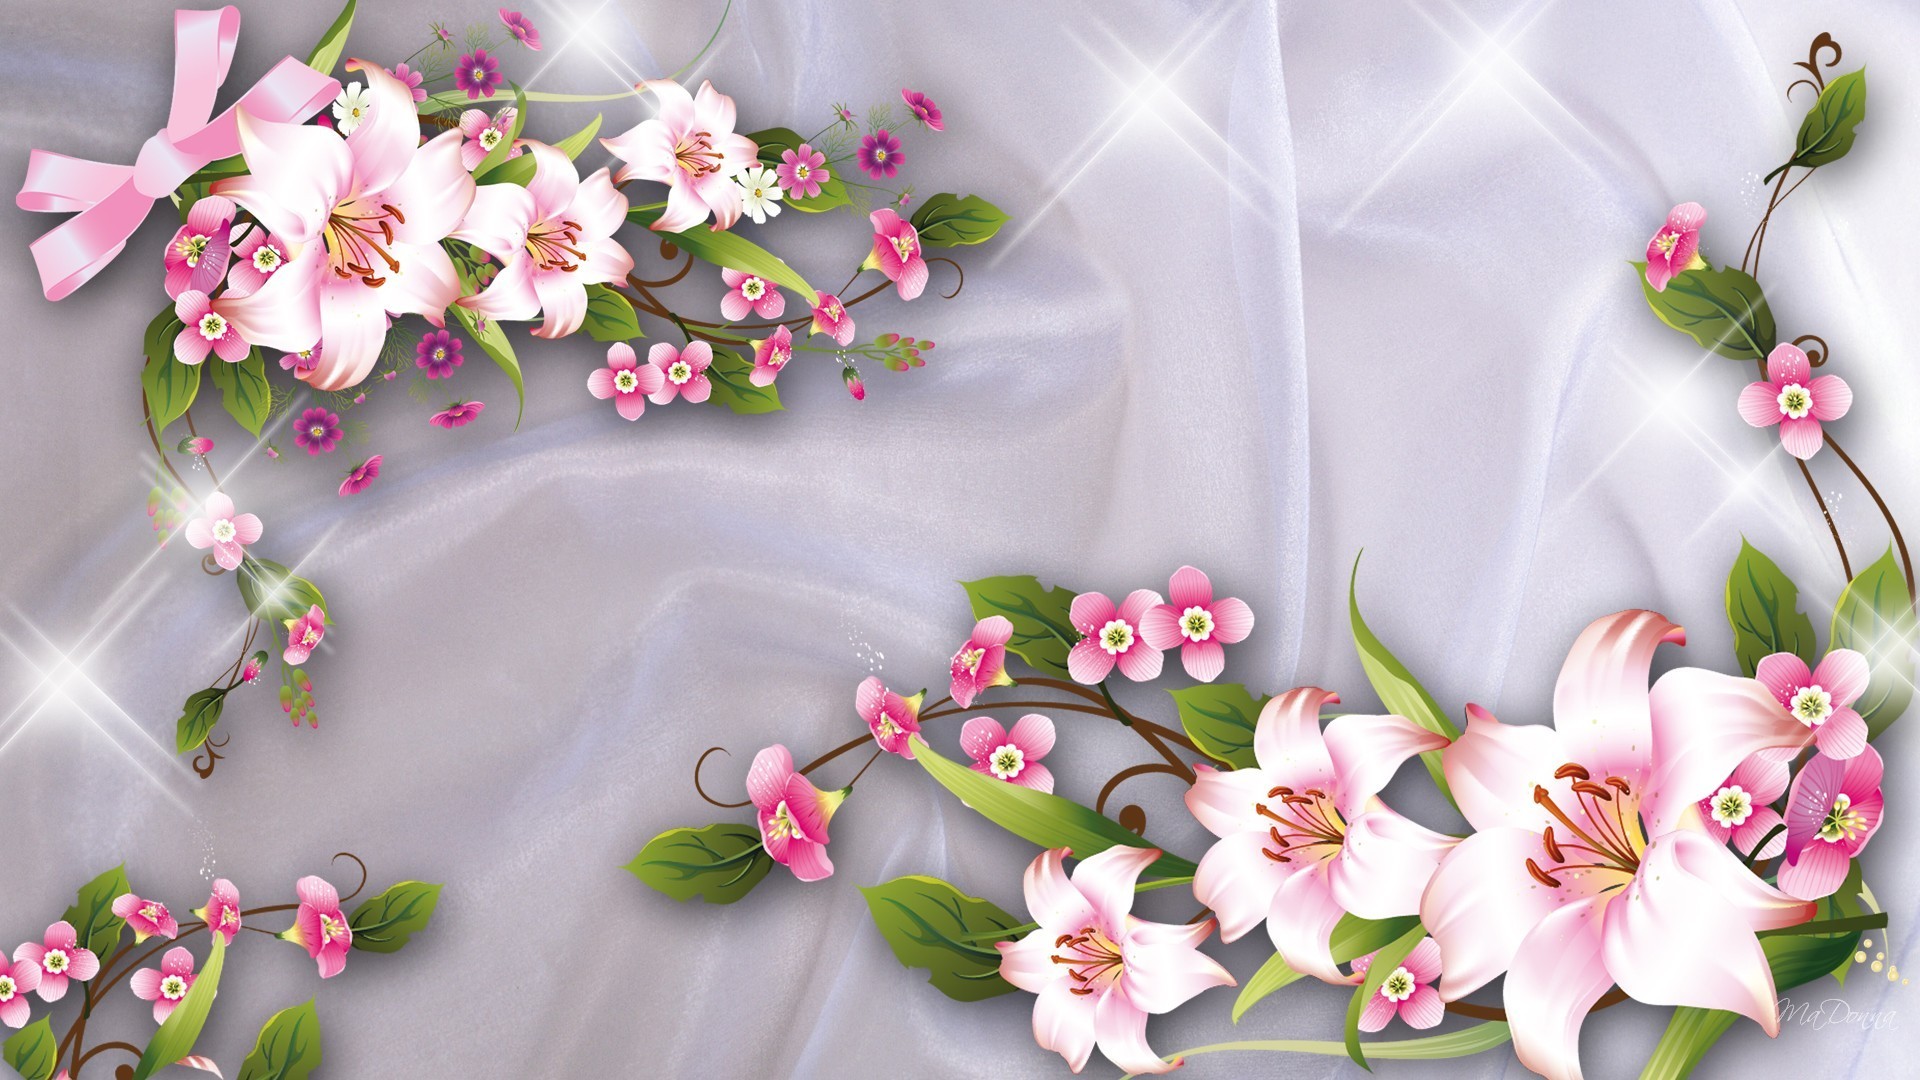 1920x1080 Bows Satin Shiny Flowers Lilies Sparkles Ribbons Stars Pink Flower Desktop  Wallpaper Hd